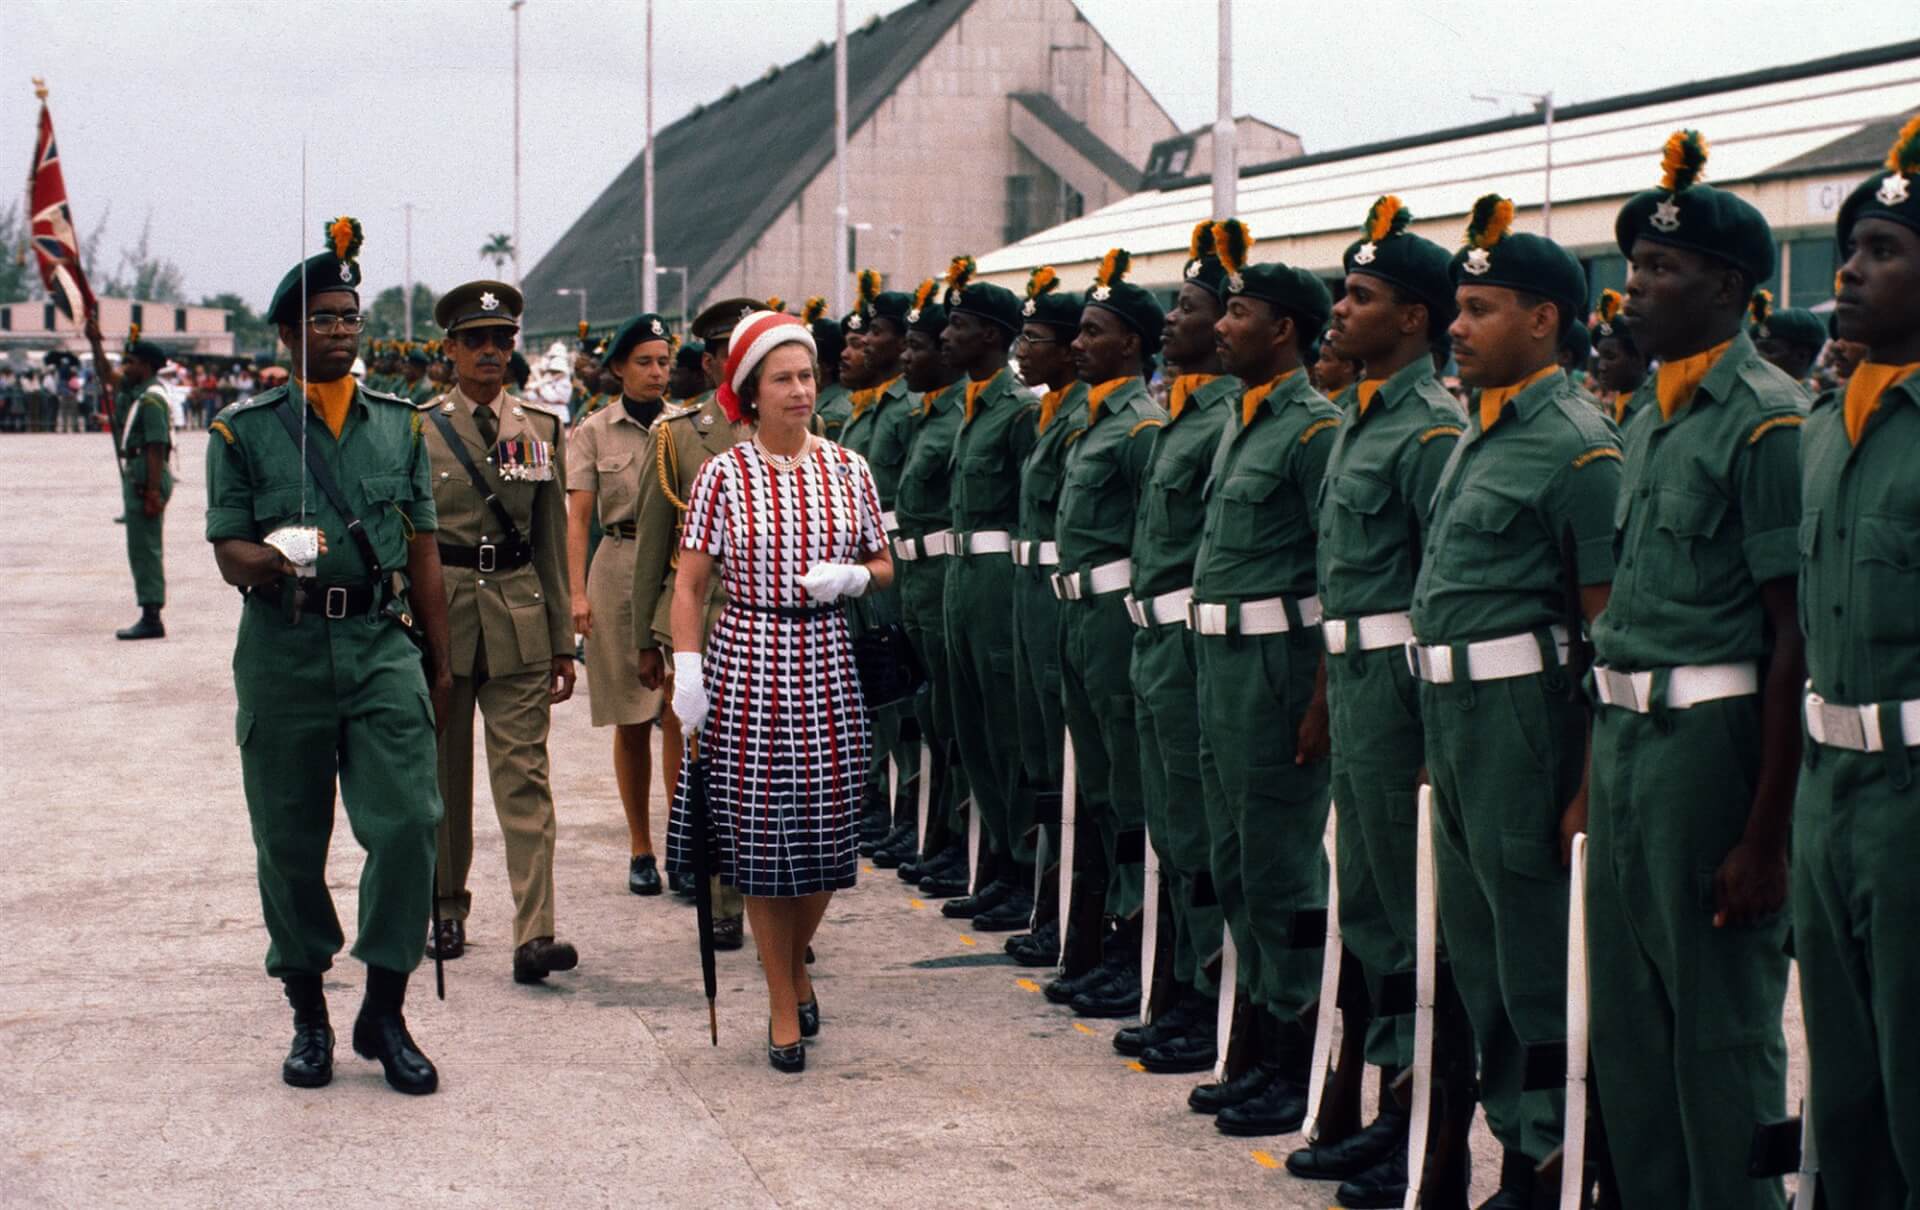 Barbados Announces Plan to Remove Queen Elizabeth as Head of State